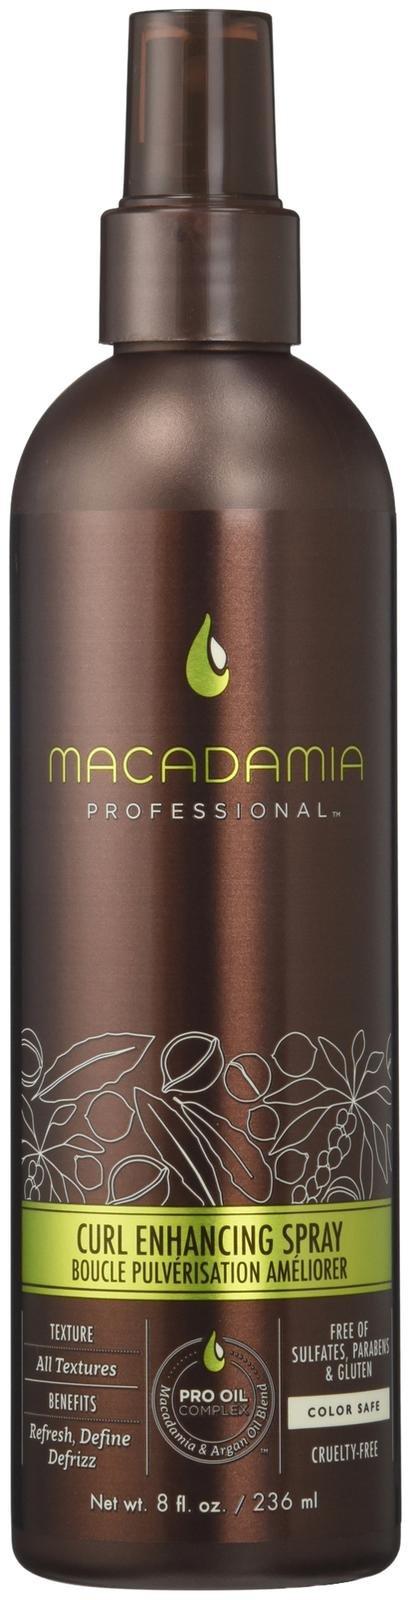 Macadamia Professional Curl Enhancing Spray - 8 Oz